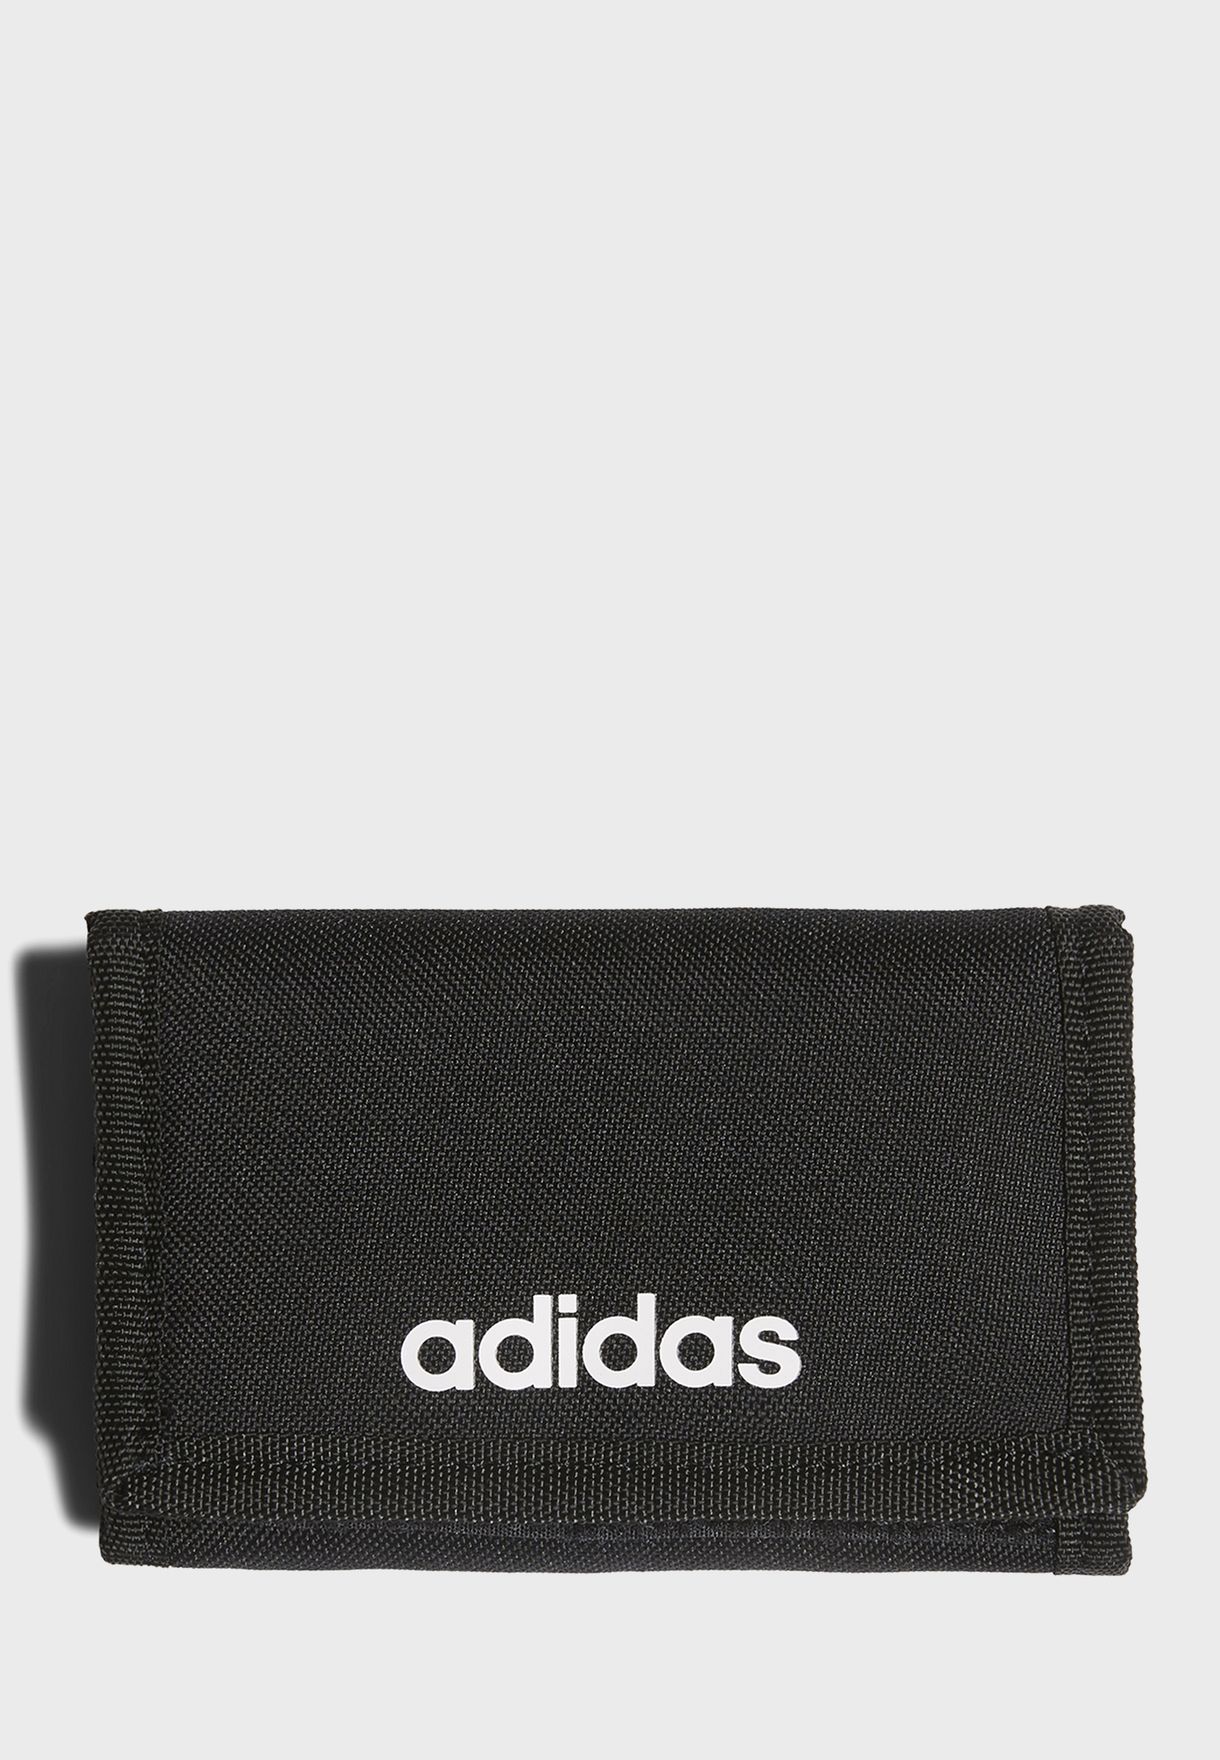 adidas unisex wallet